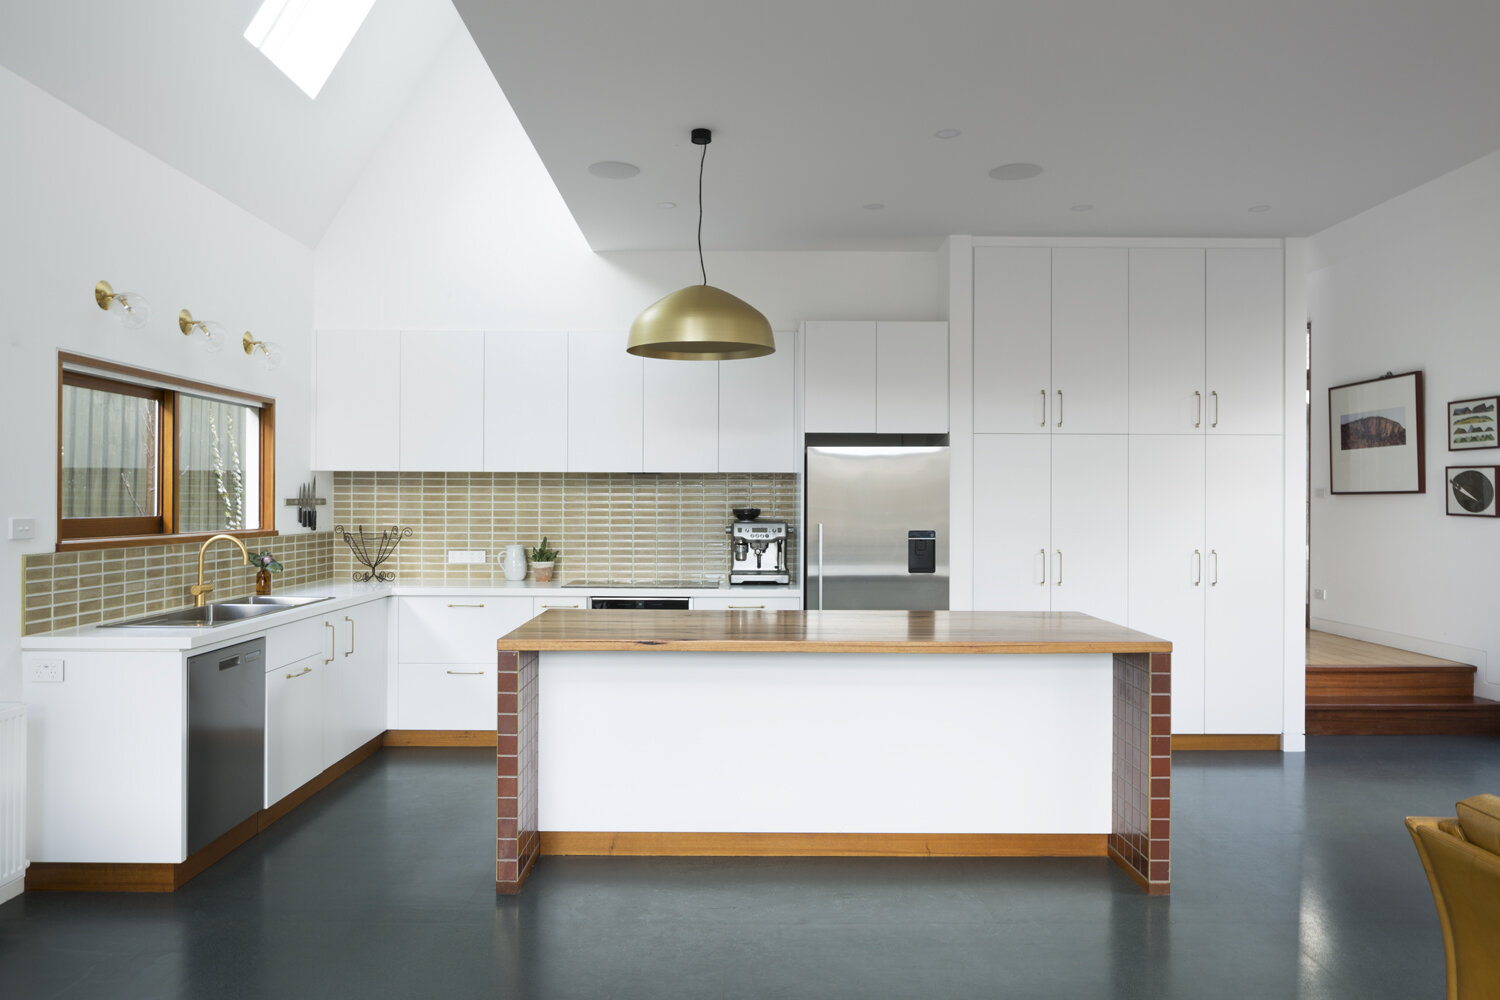 Clifton Hill new kitchen designed by Melbourne interior designer Meredith Lee